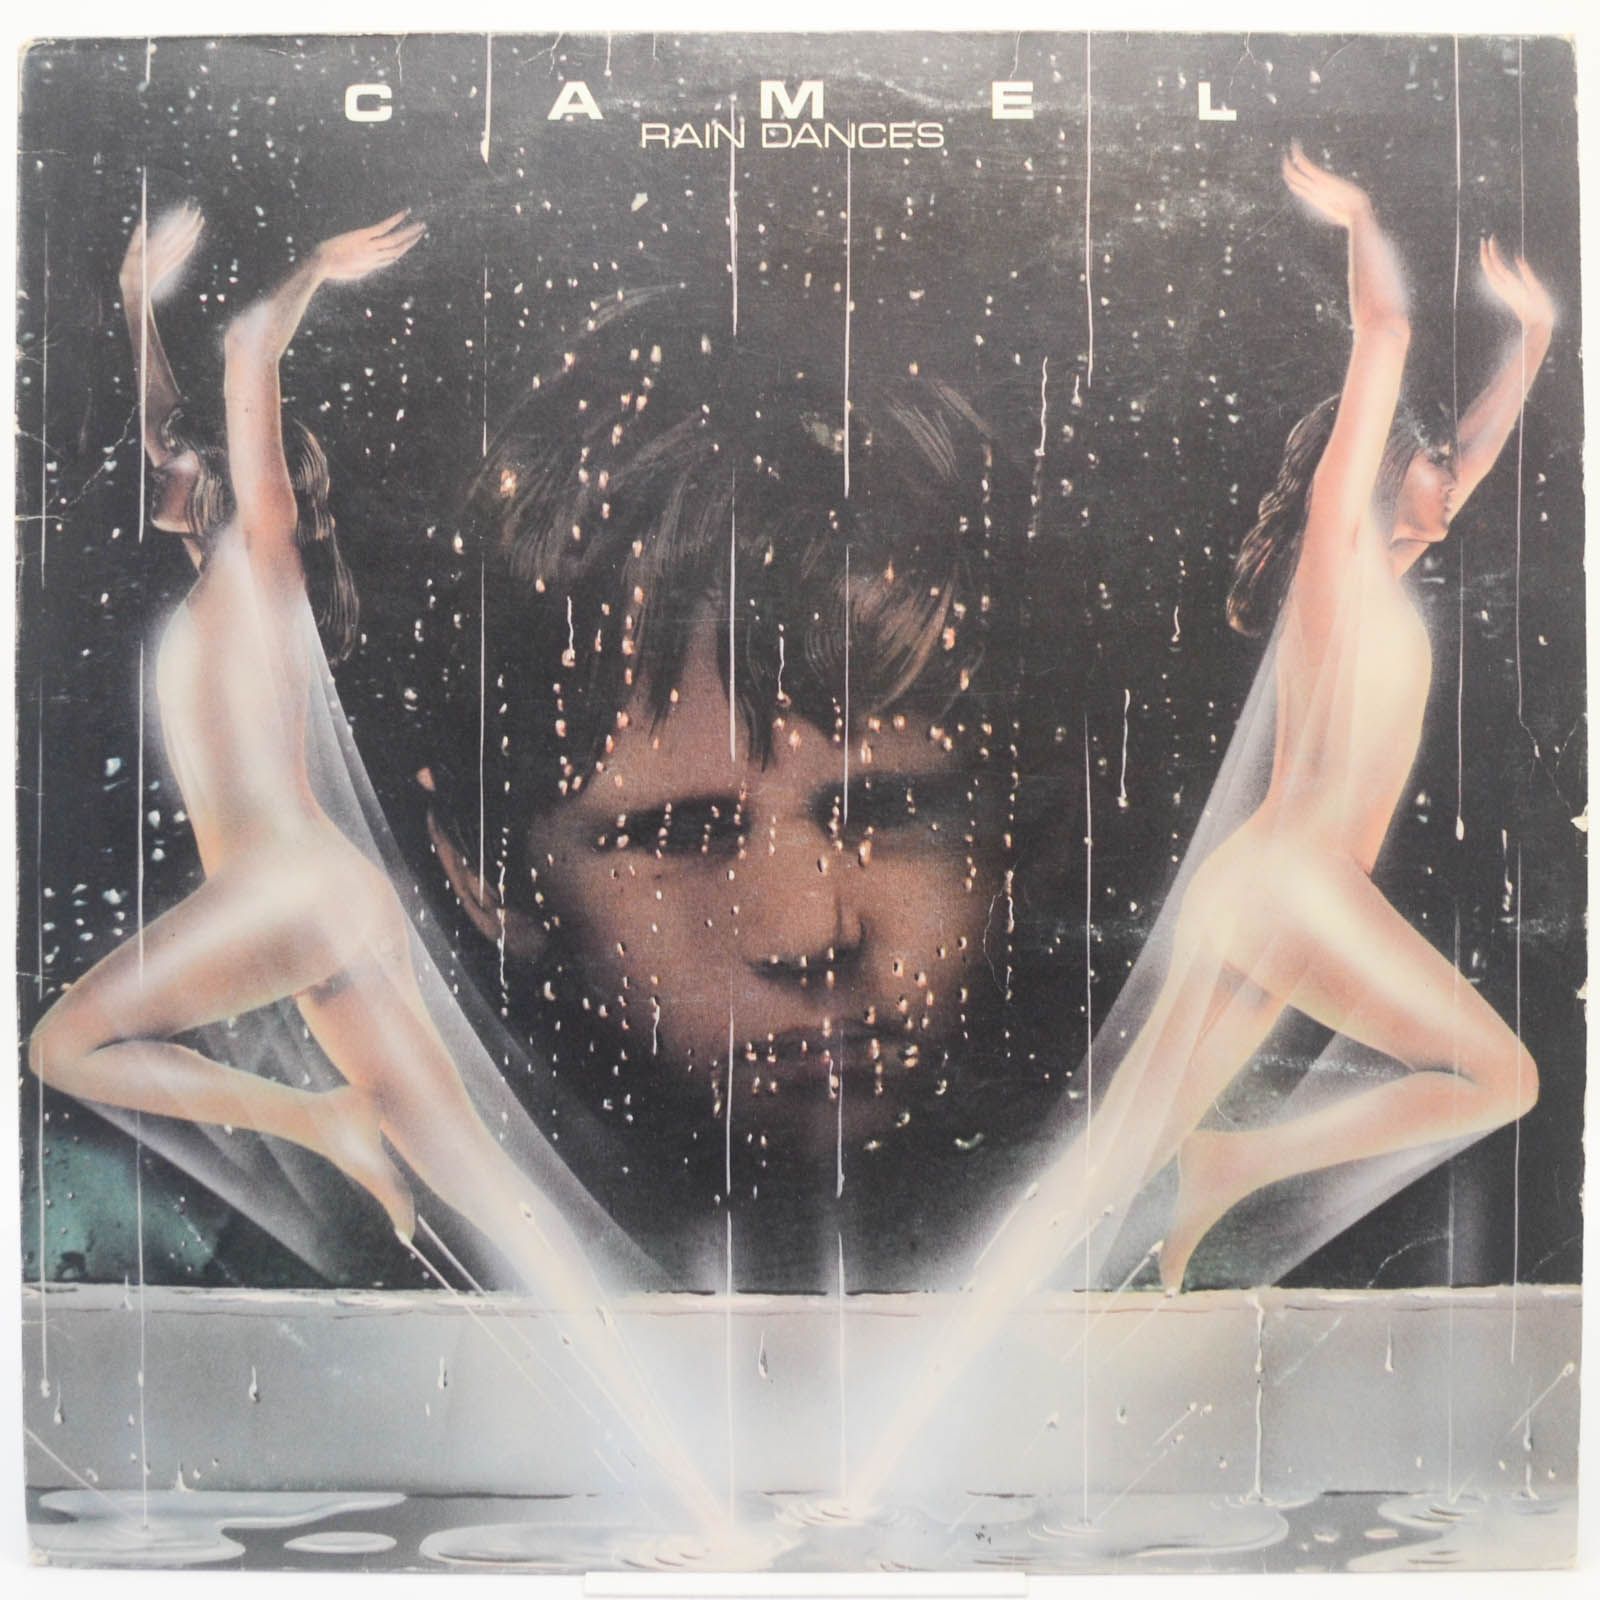 Camel — Rain Dances, 1977